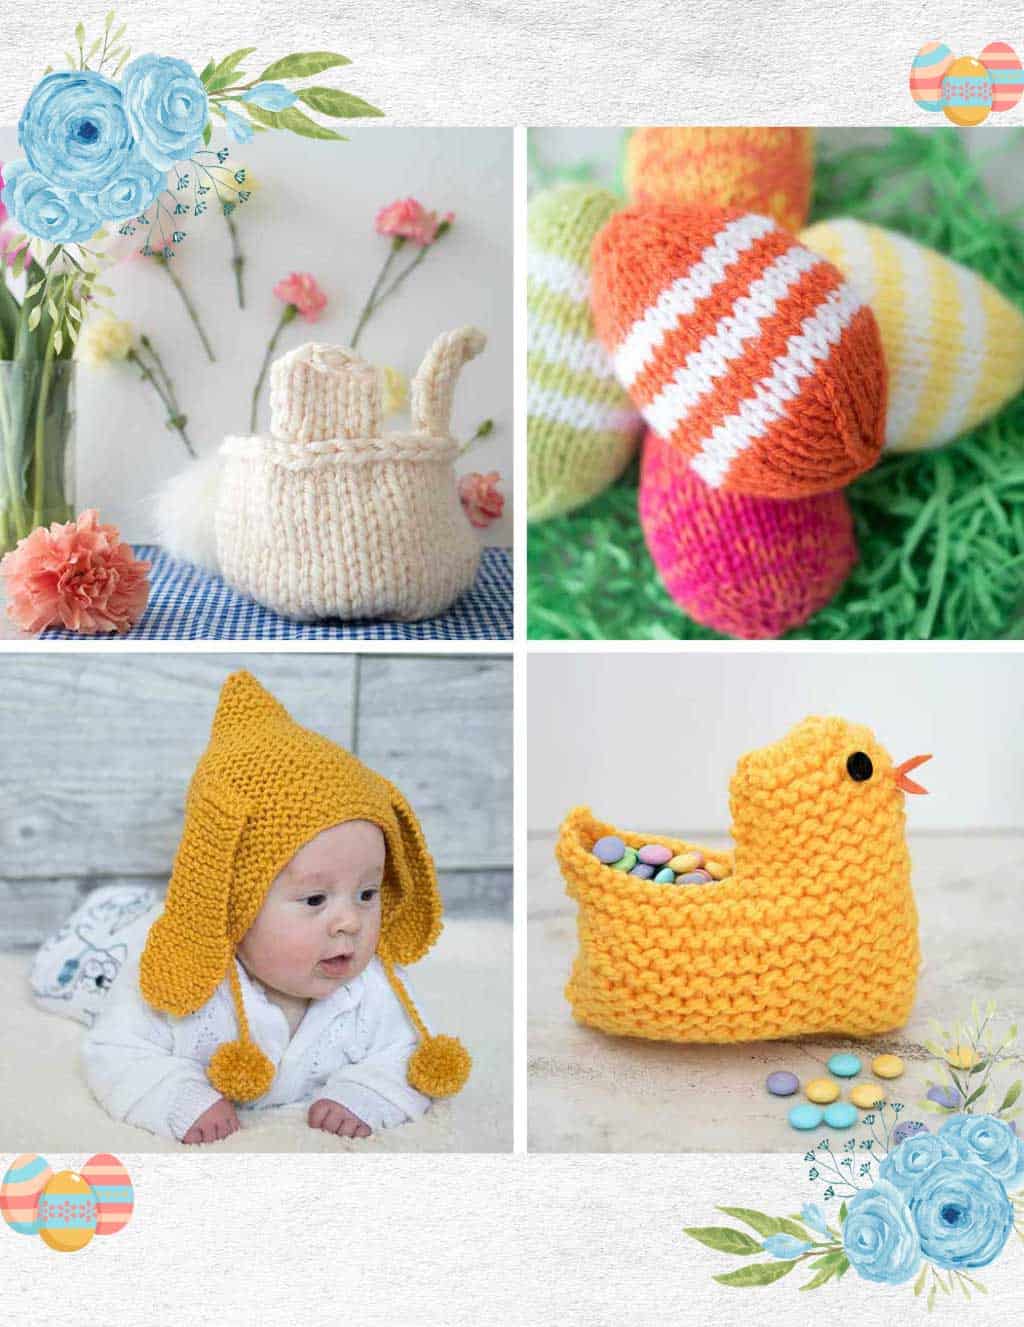 Free Easter Knitting Patterns